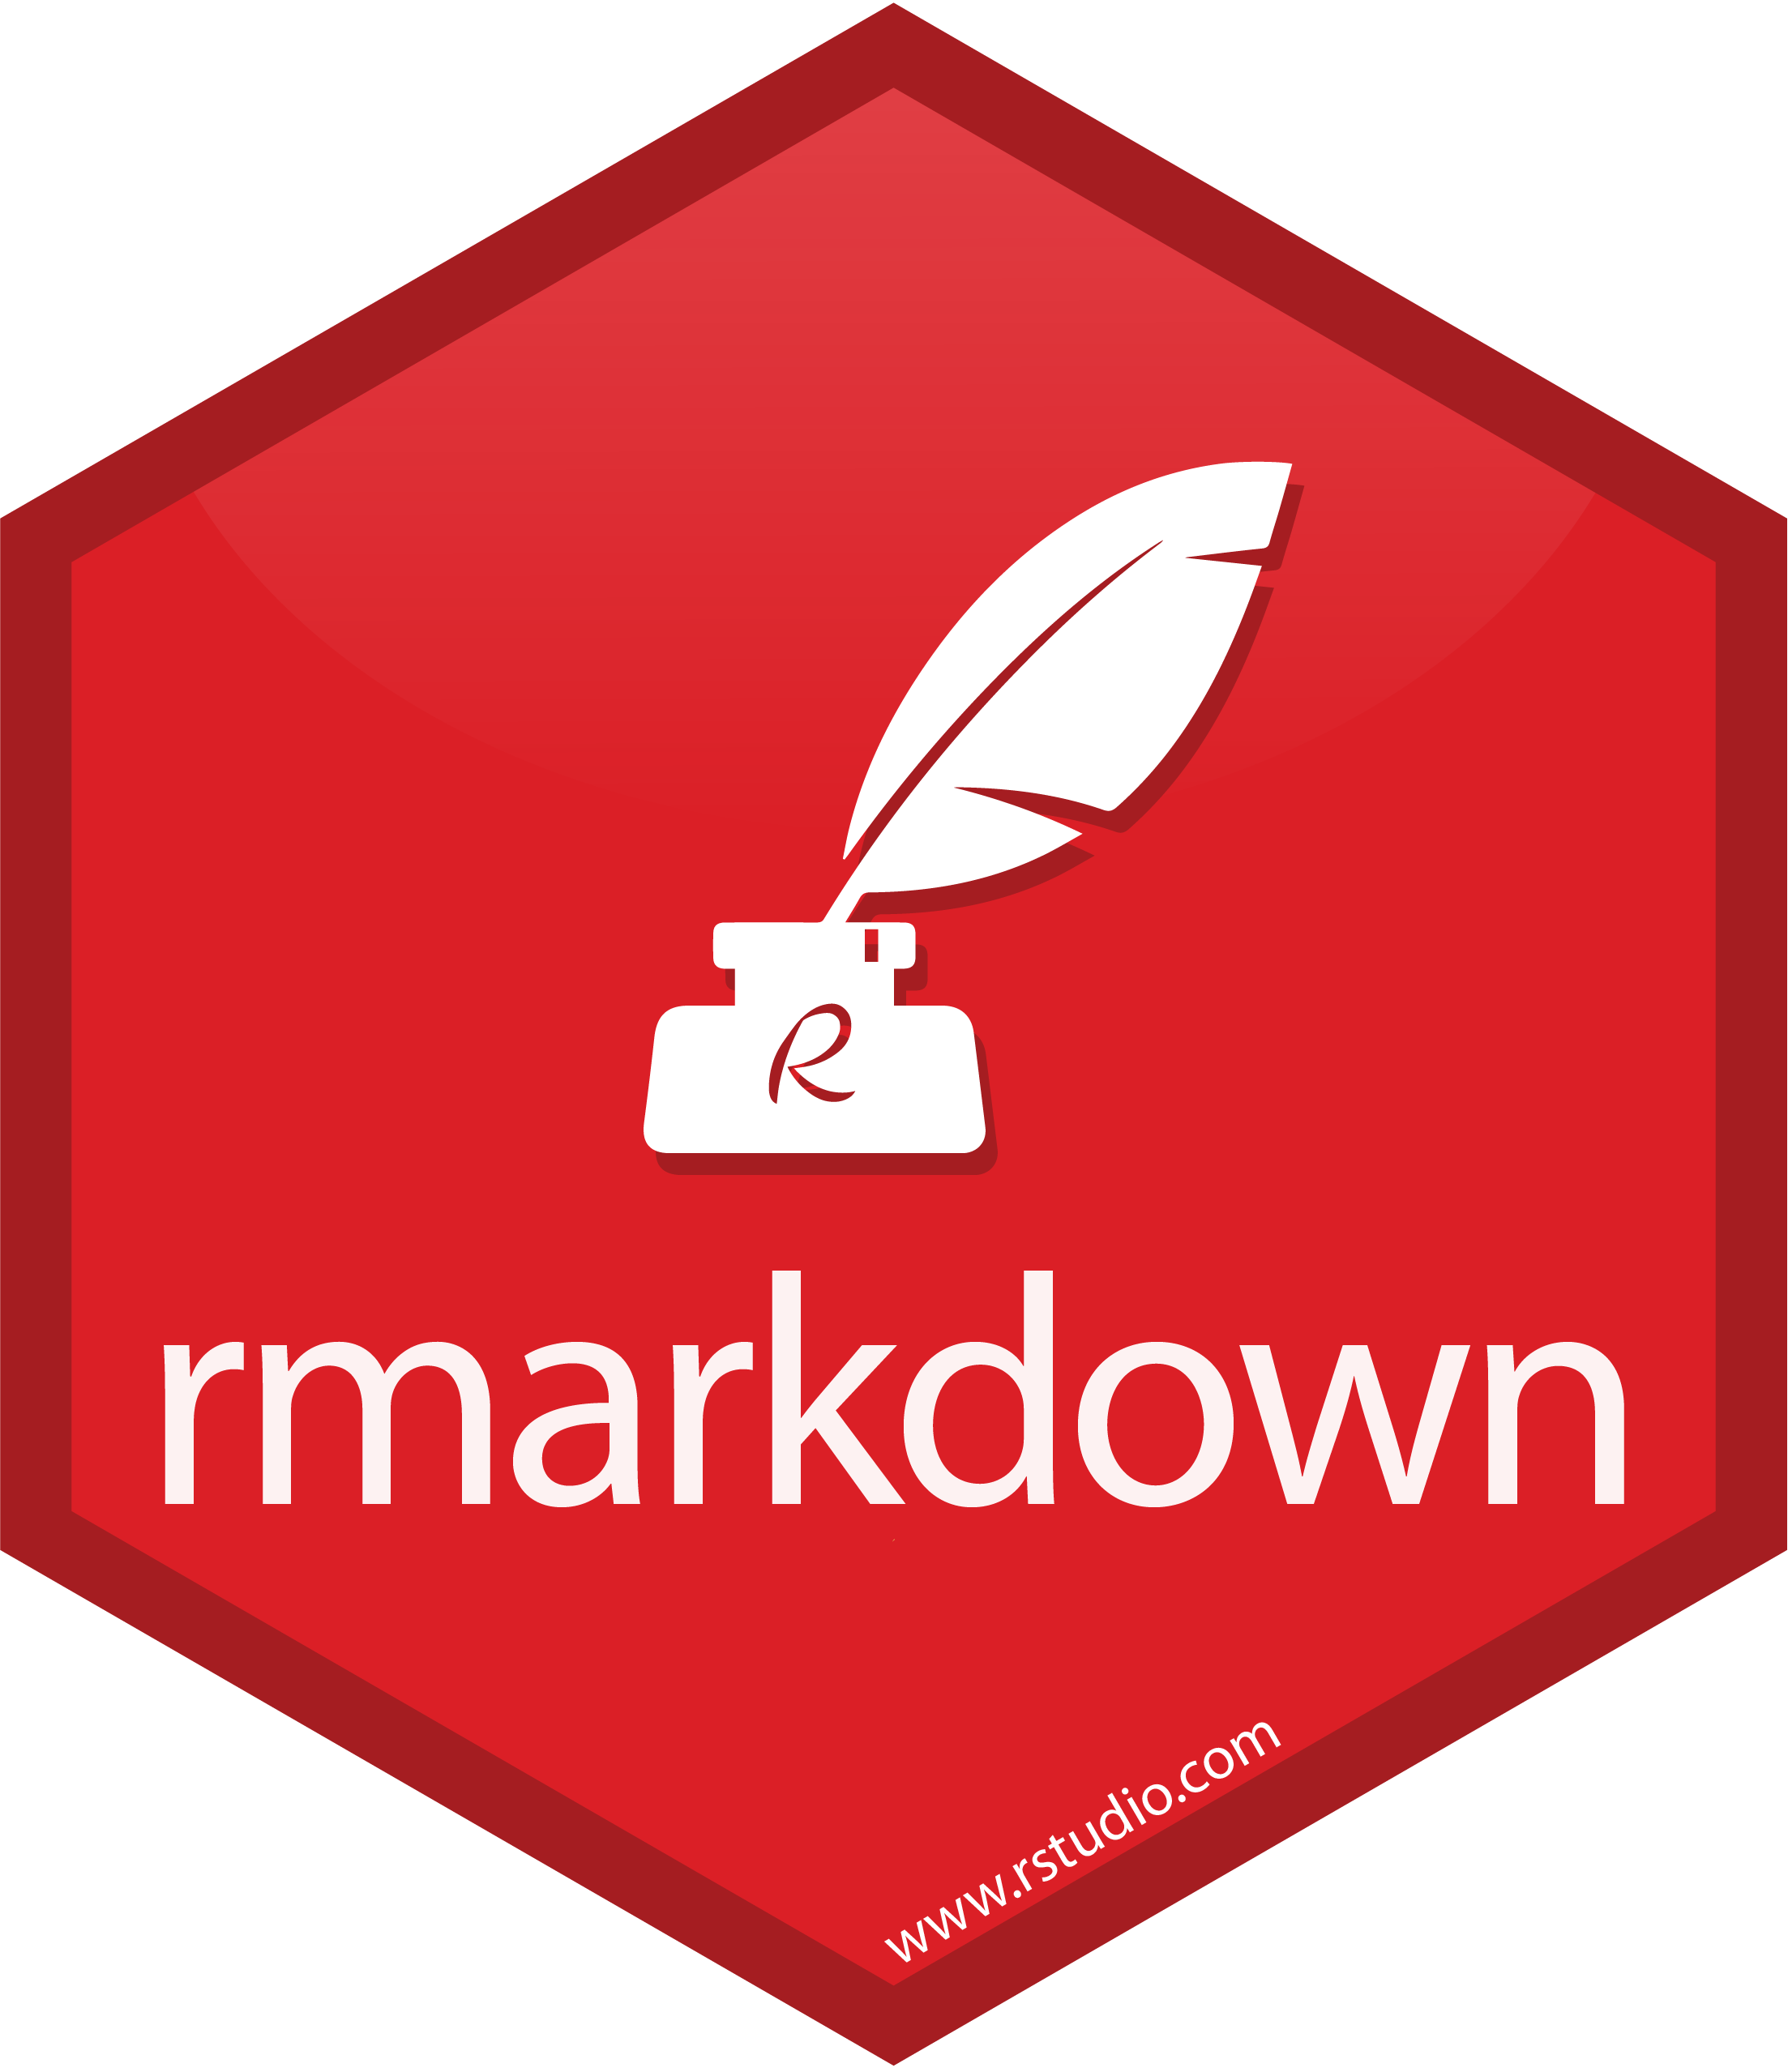 rmarkdown sticker